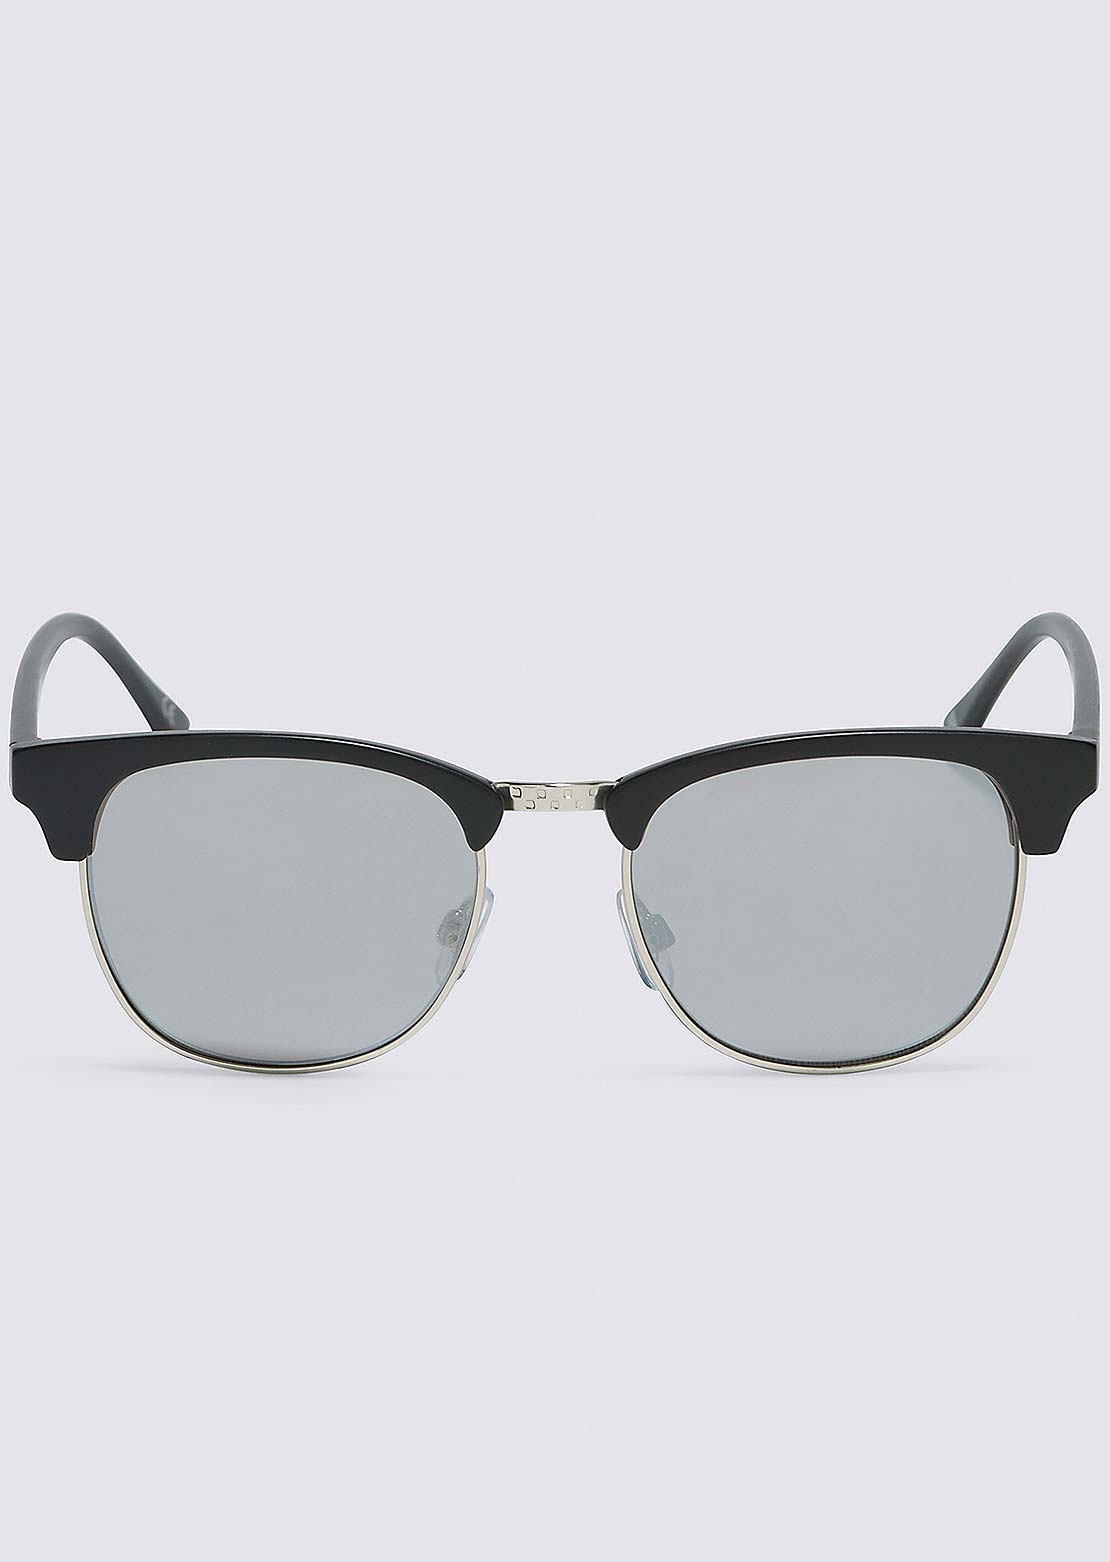 Vans Unisex Dunville Shades Sunglasses Matte Black/Silver Mirror